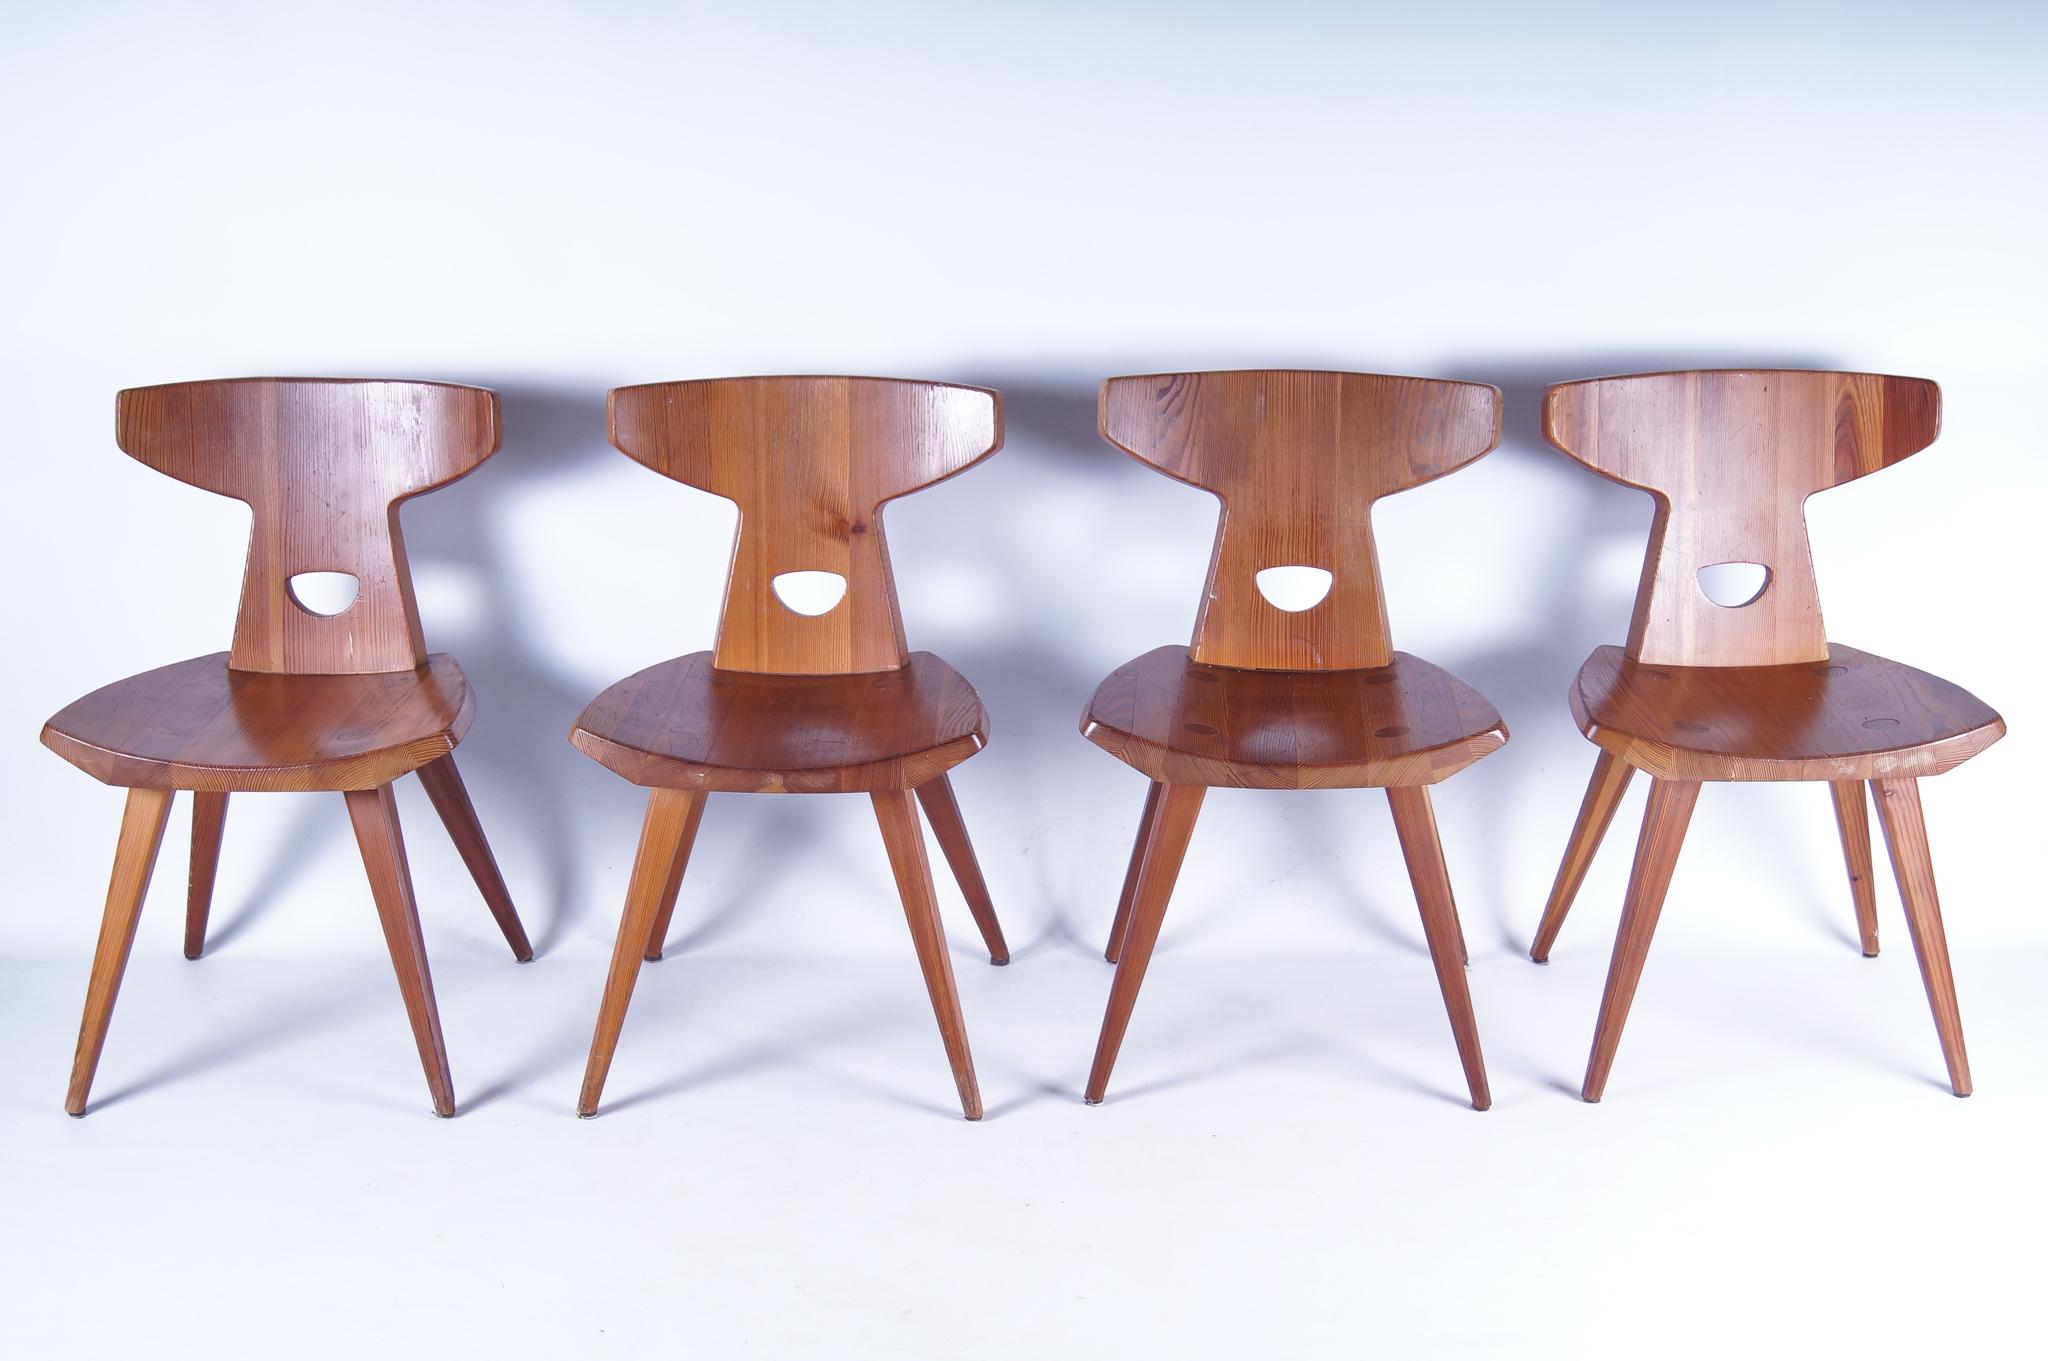 Danish 1960s Jacob Kielland-Brandt Dining Room Chairs for I. Christiansen, Set of 4